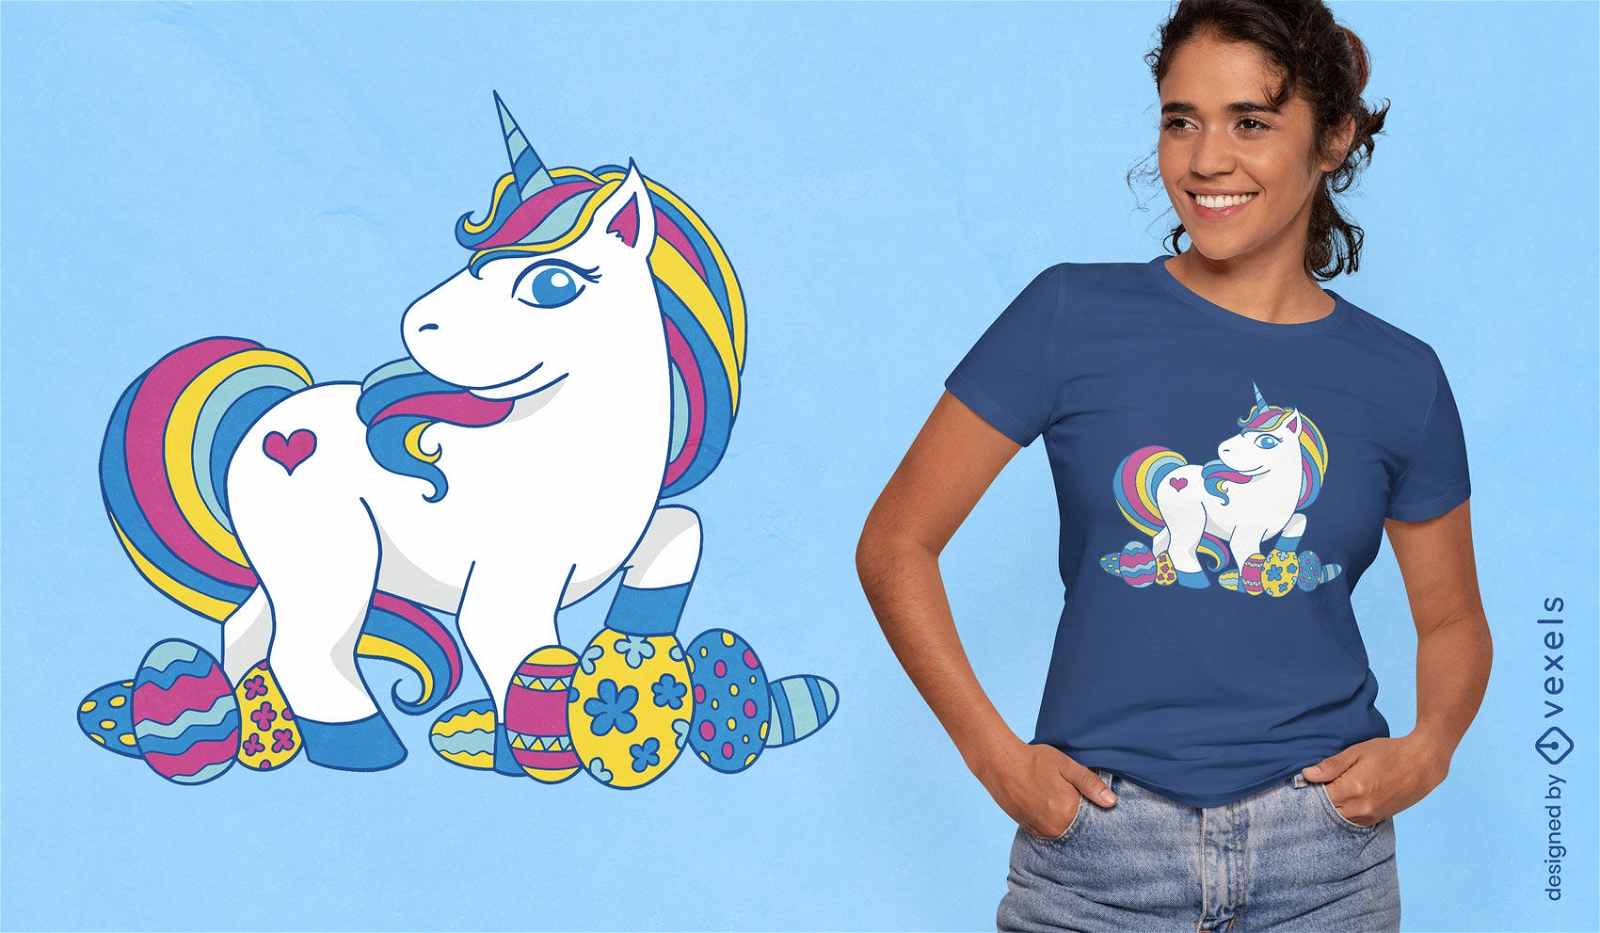 Unicorn and easter eggs t-shirt design